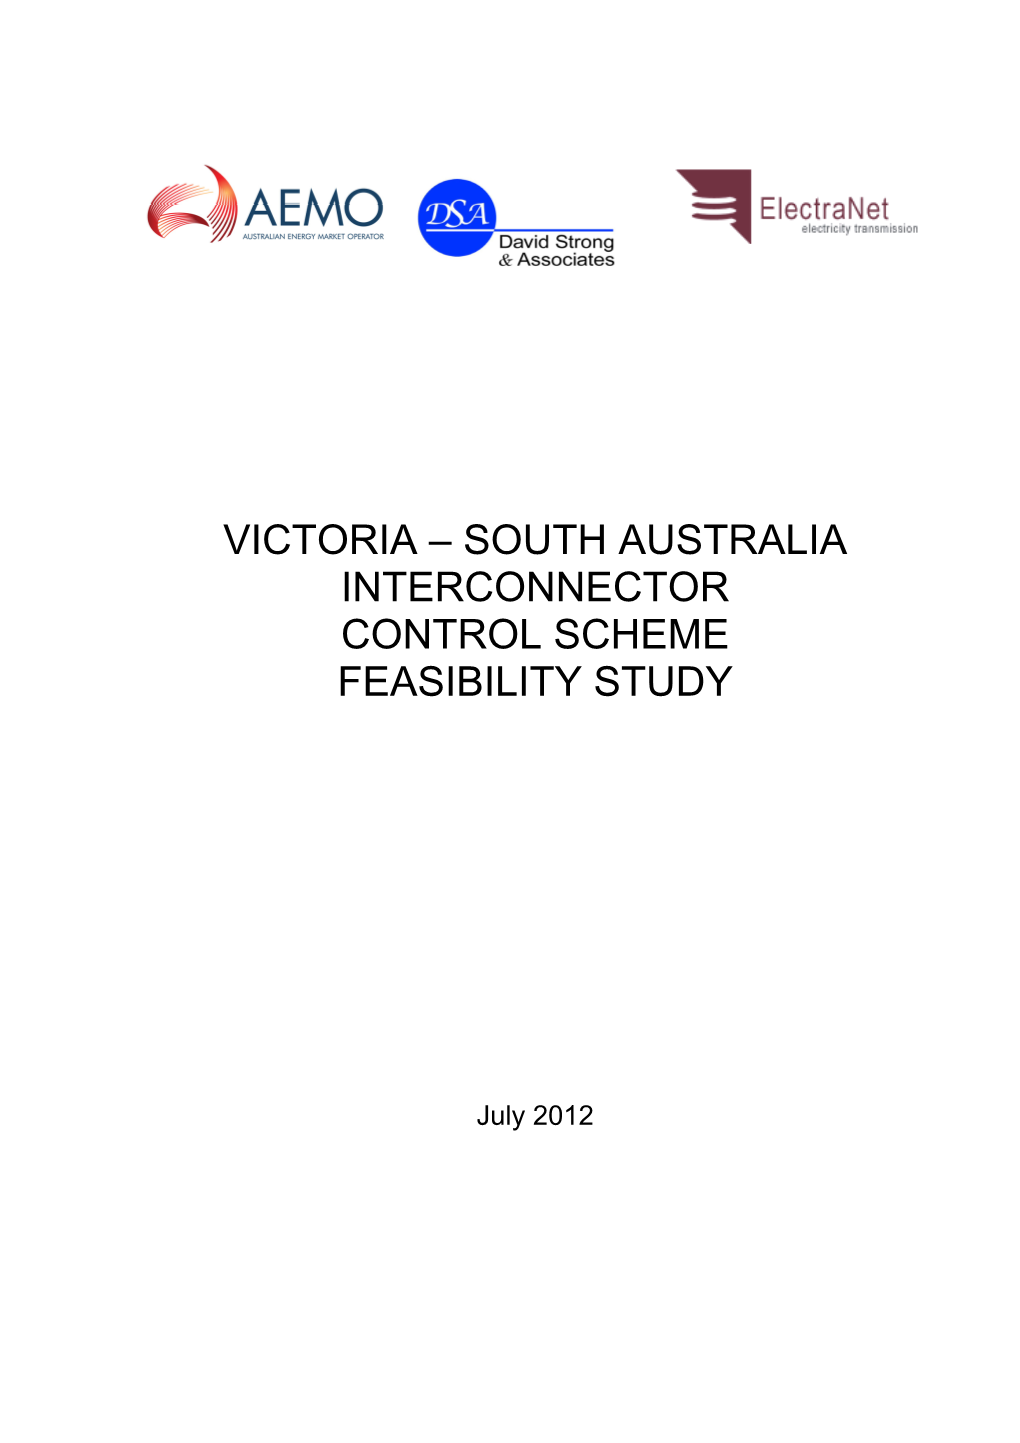 Victoria – South Australia Interconnector Control Scheme Feasibility Study